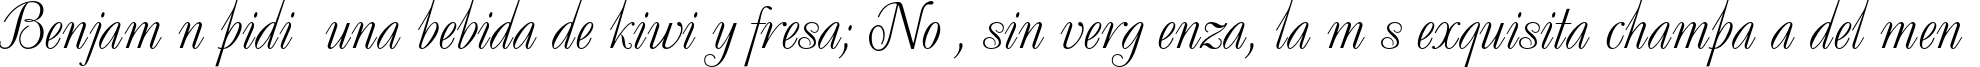 Пример написания шрифтом DecorC текста на испанском